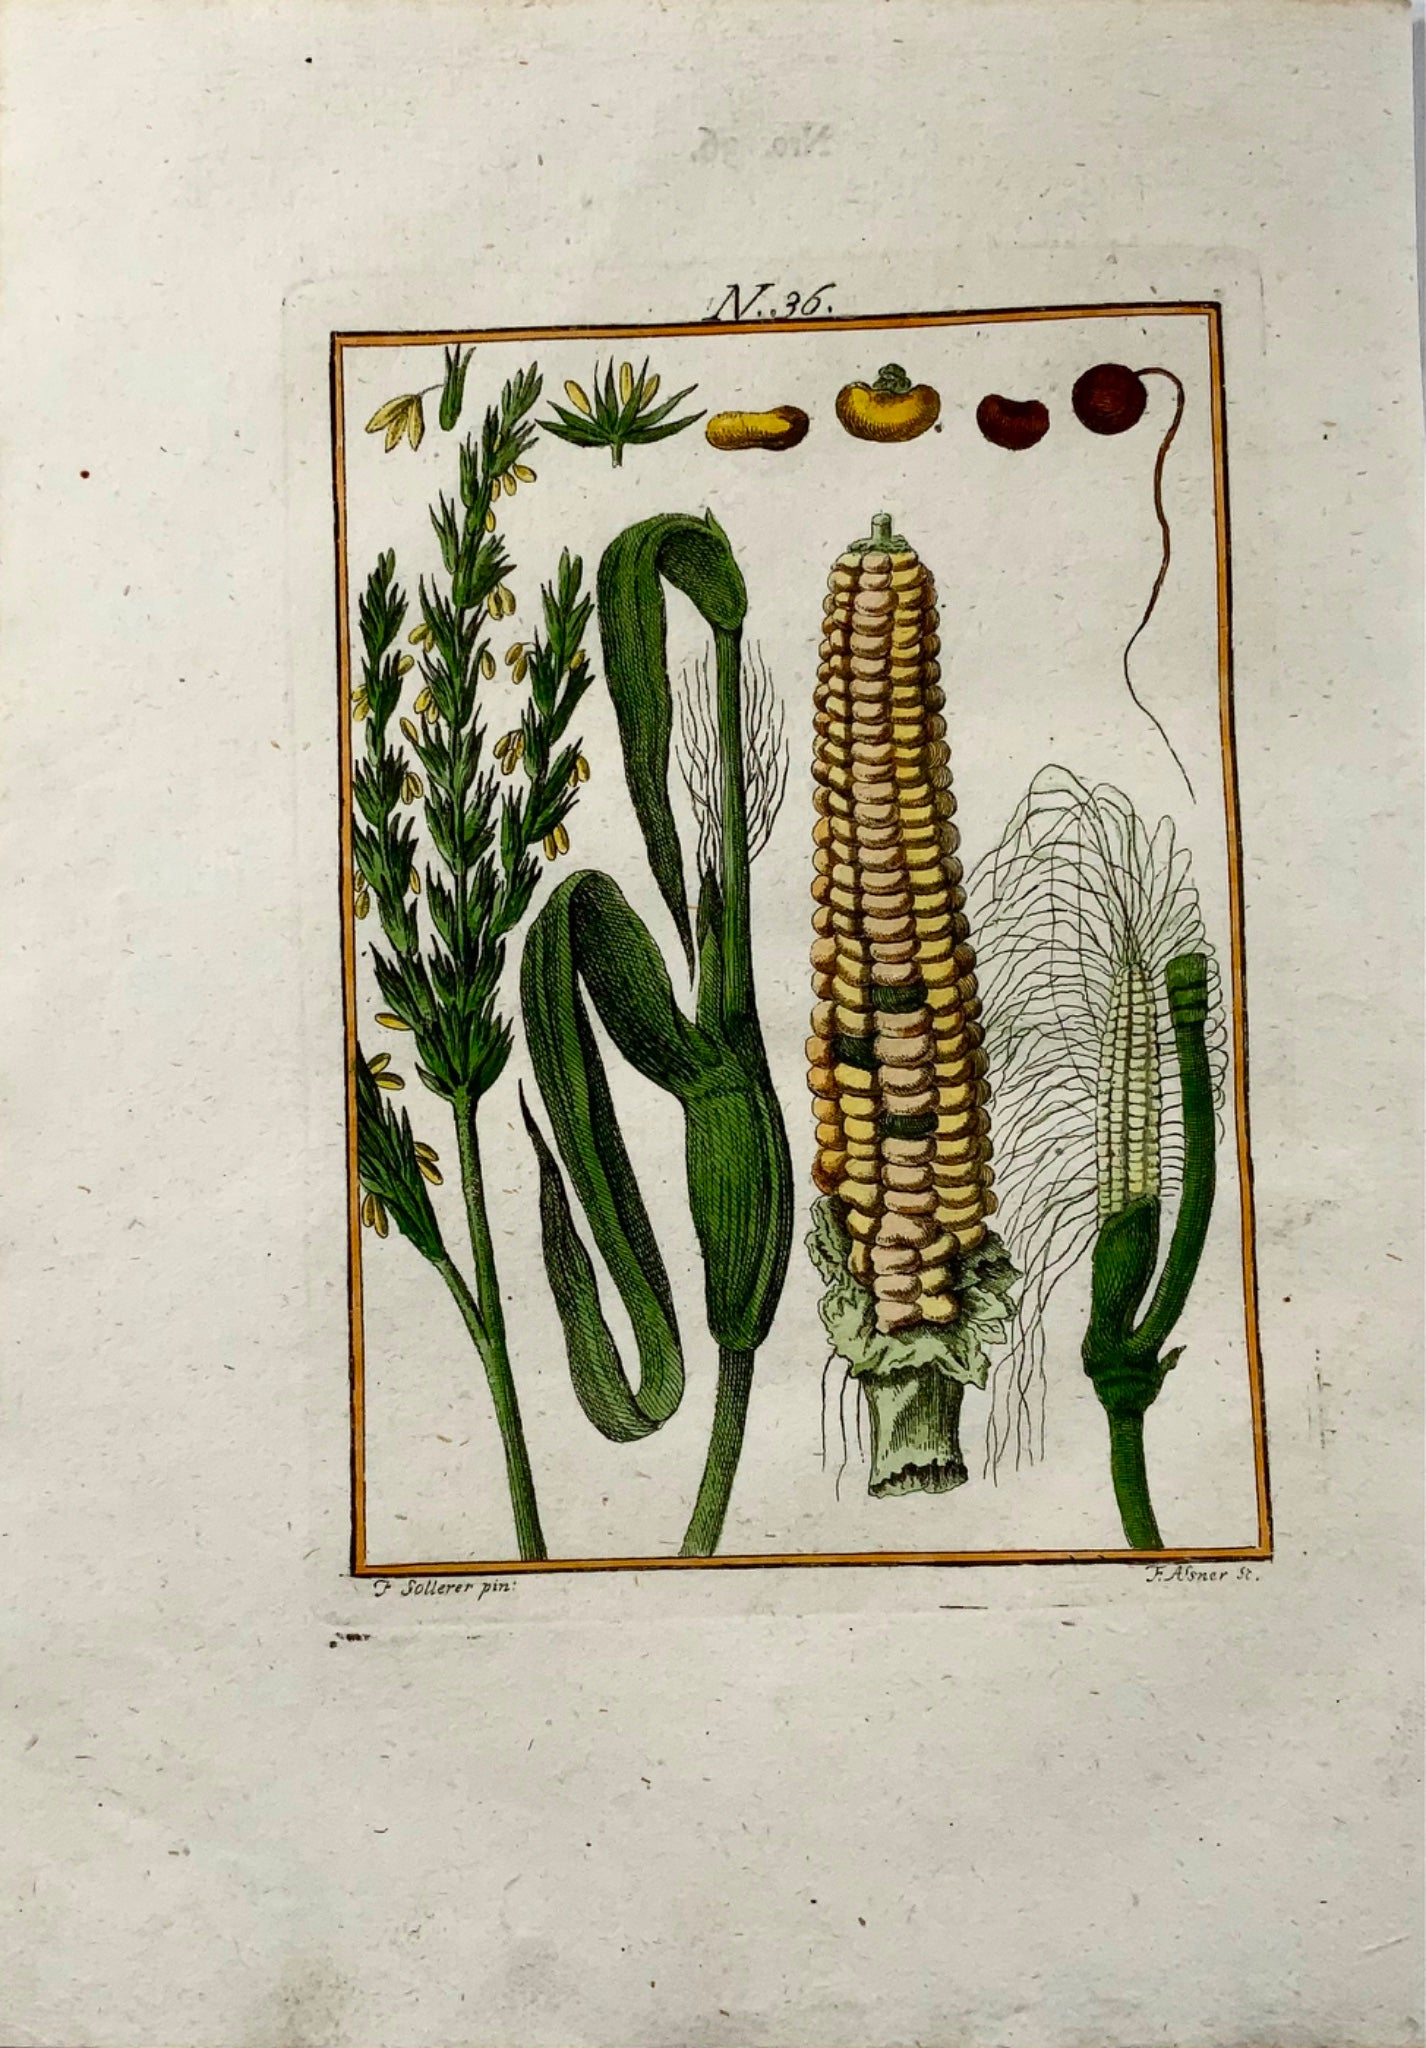 1790 Mais, mais, incisione colorata a mano di Sollerer, agricoltura, botanica